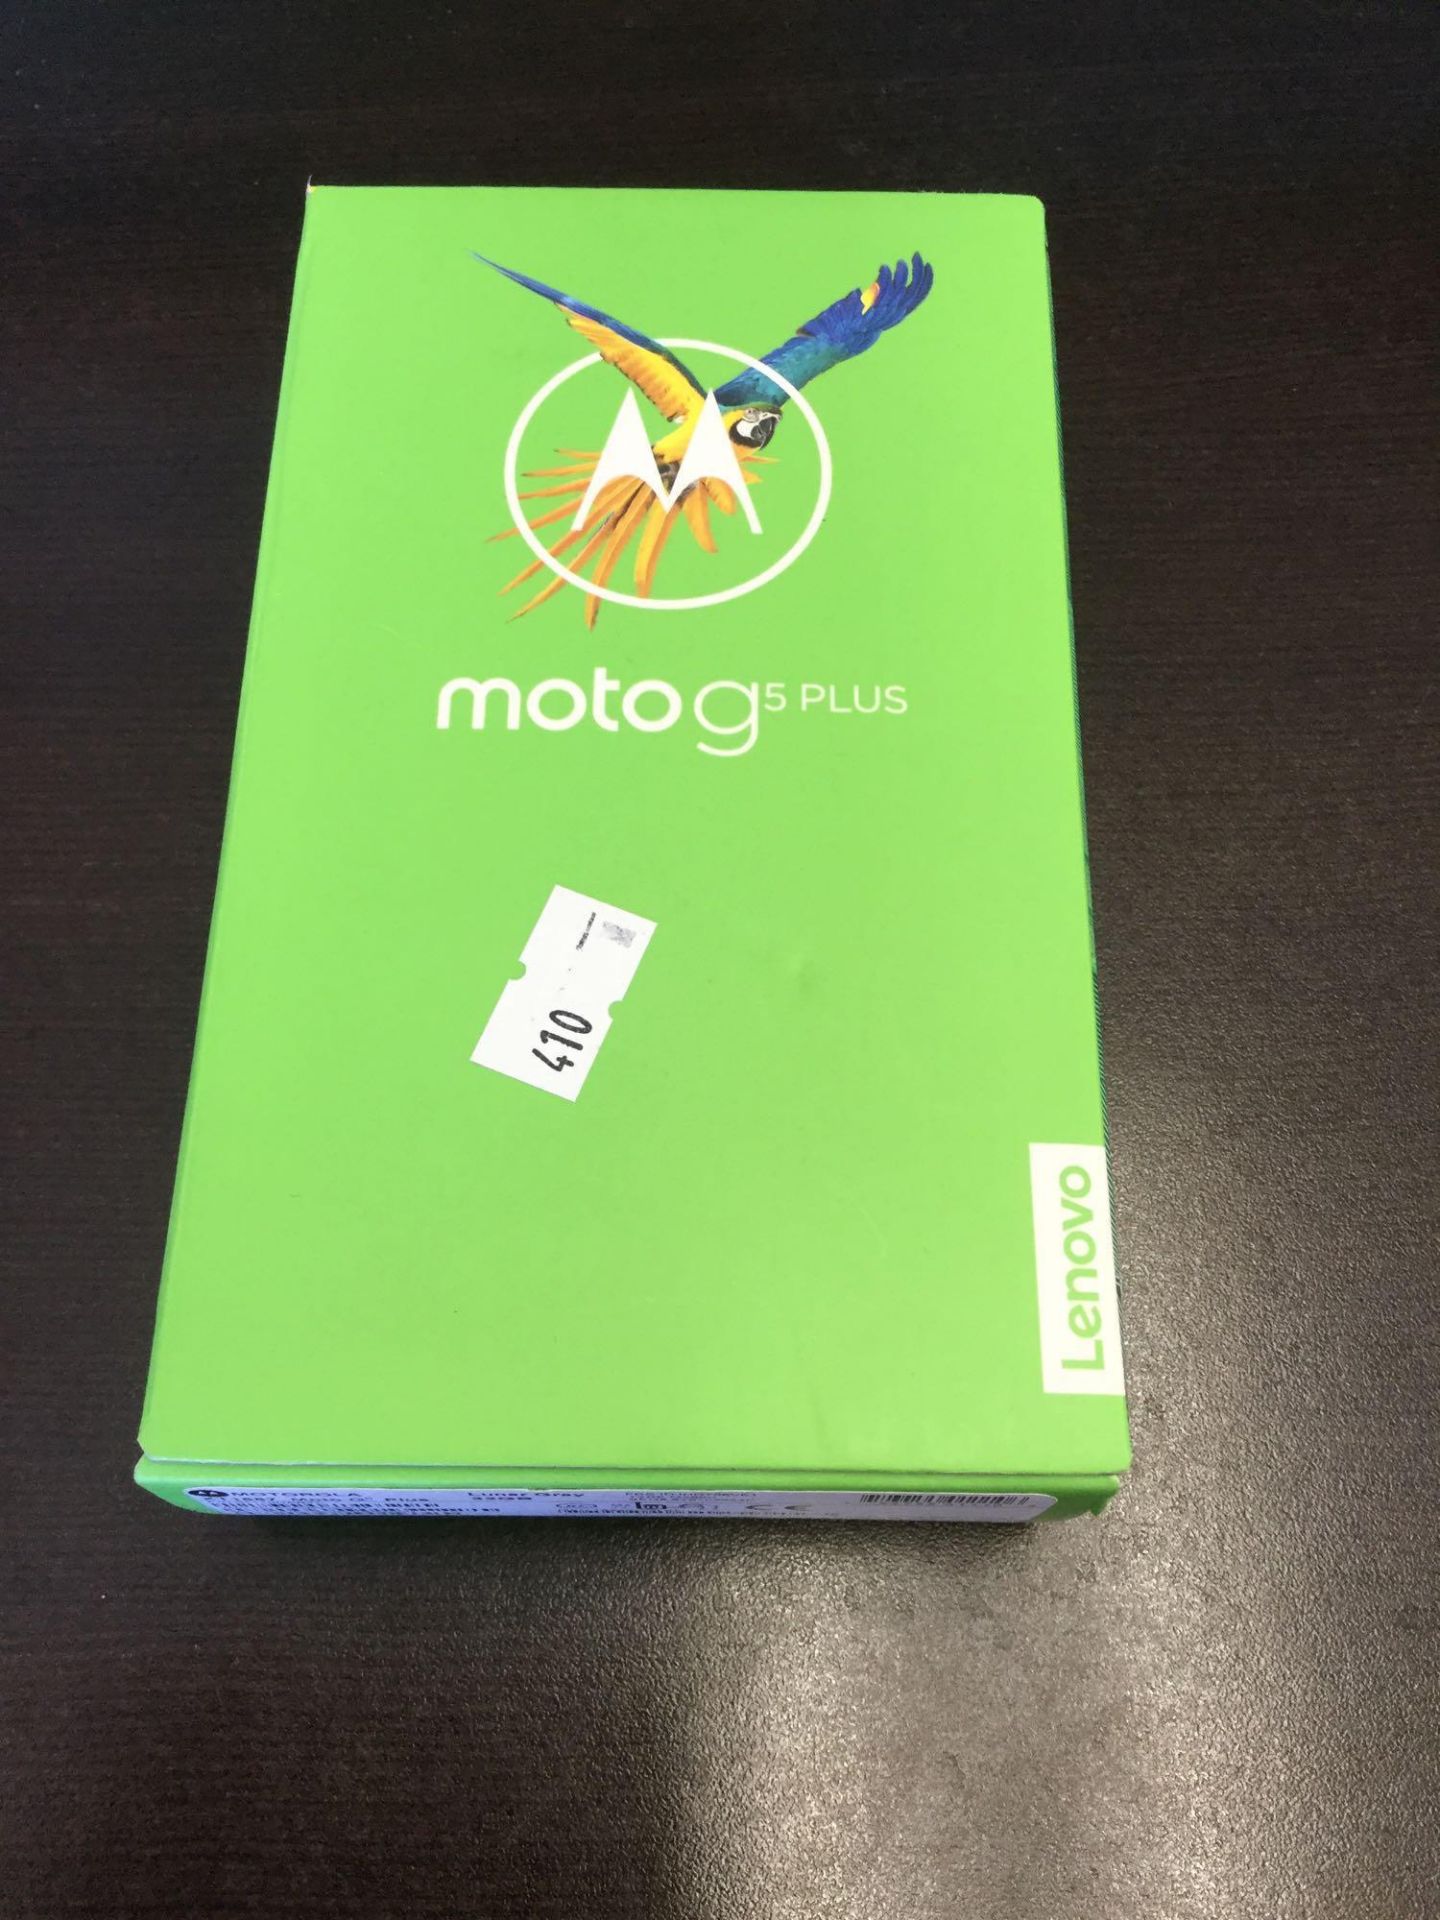 Motorola XT1687 Motot G5 Plus - 32 GB Smart Phone- Lunar Gray